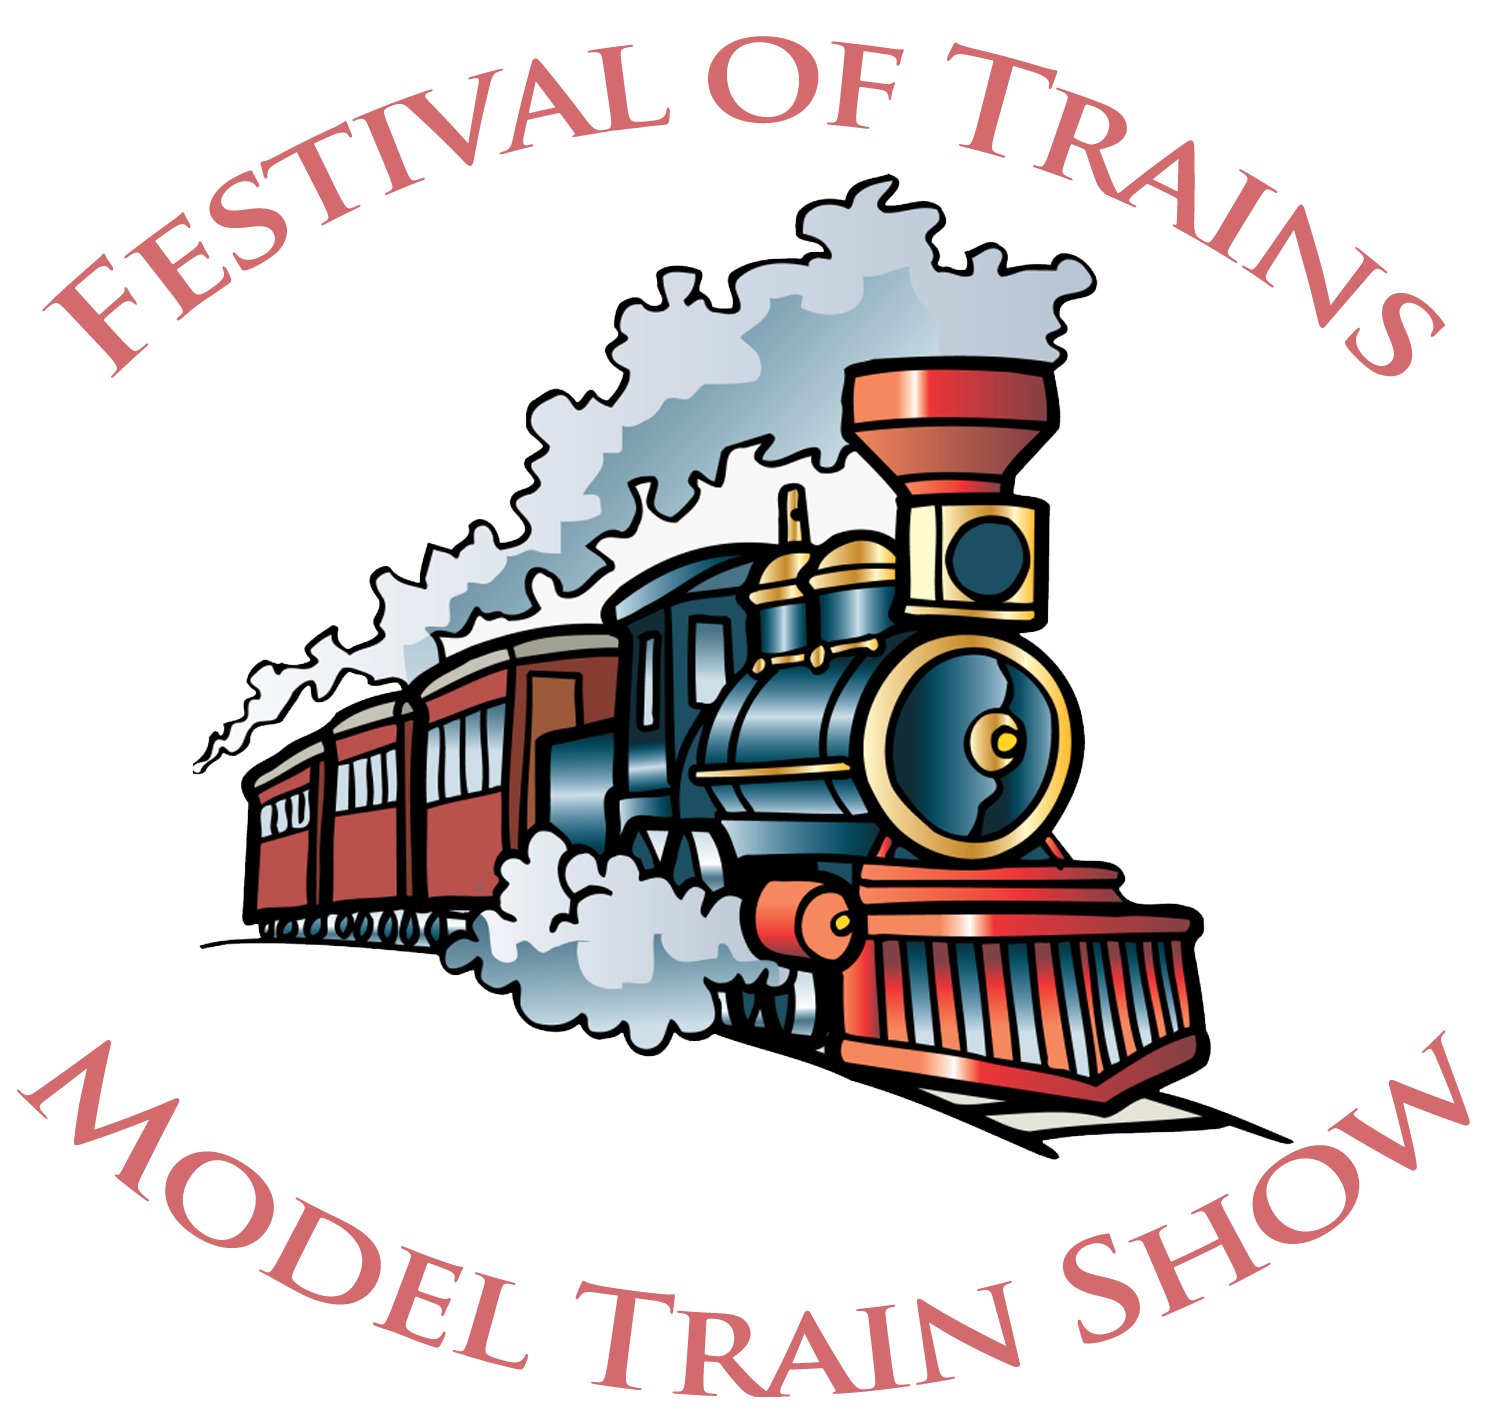 Festival Of Trains